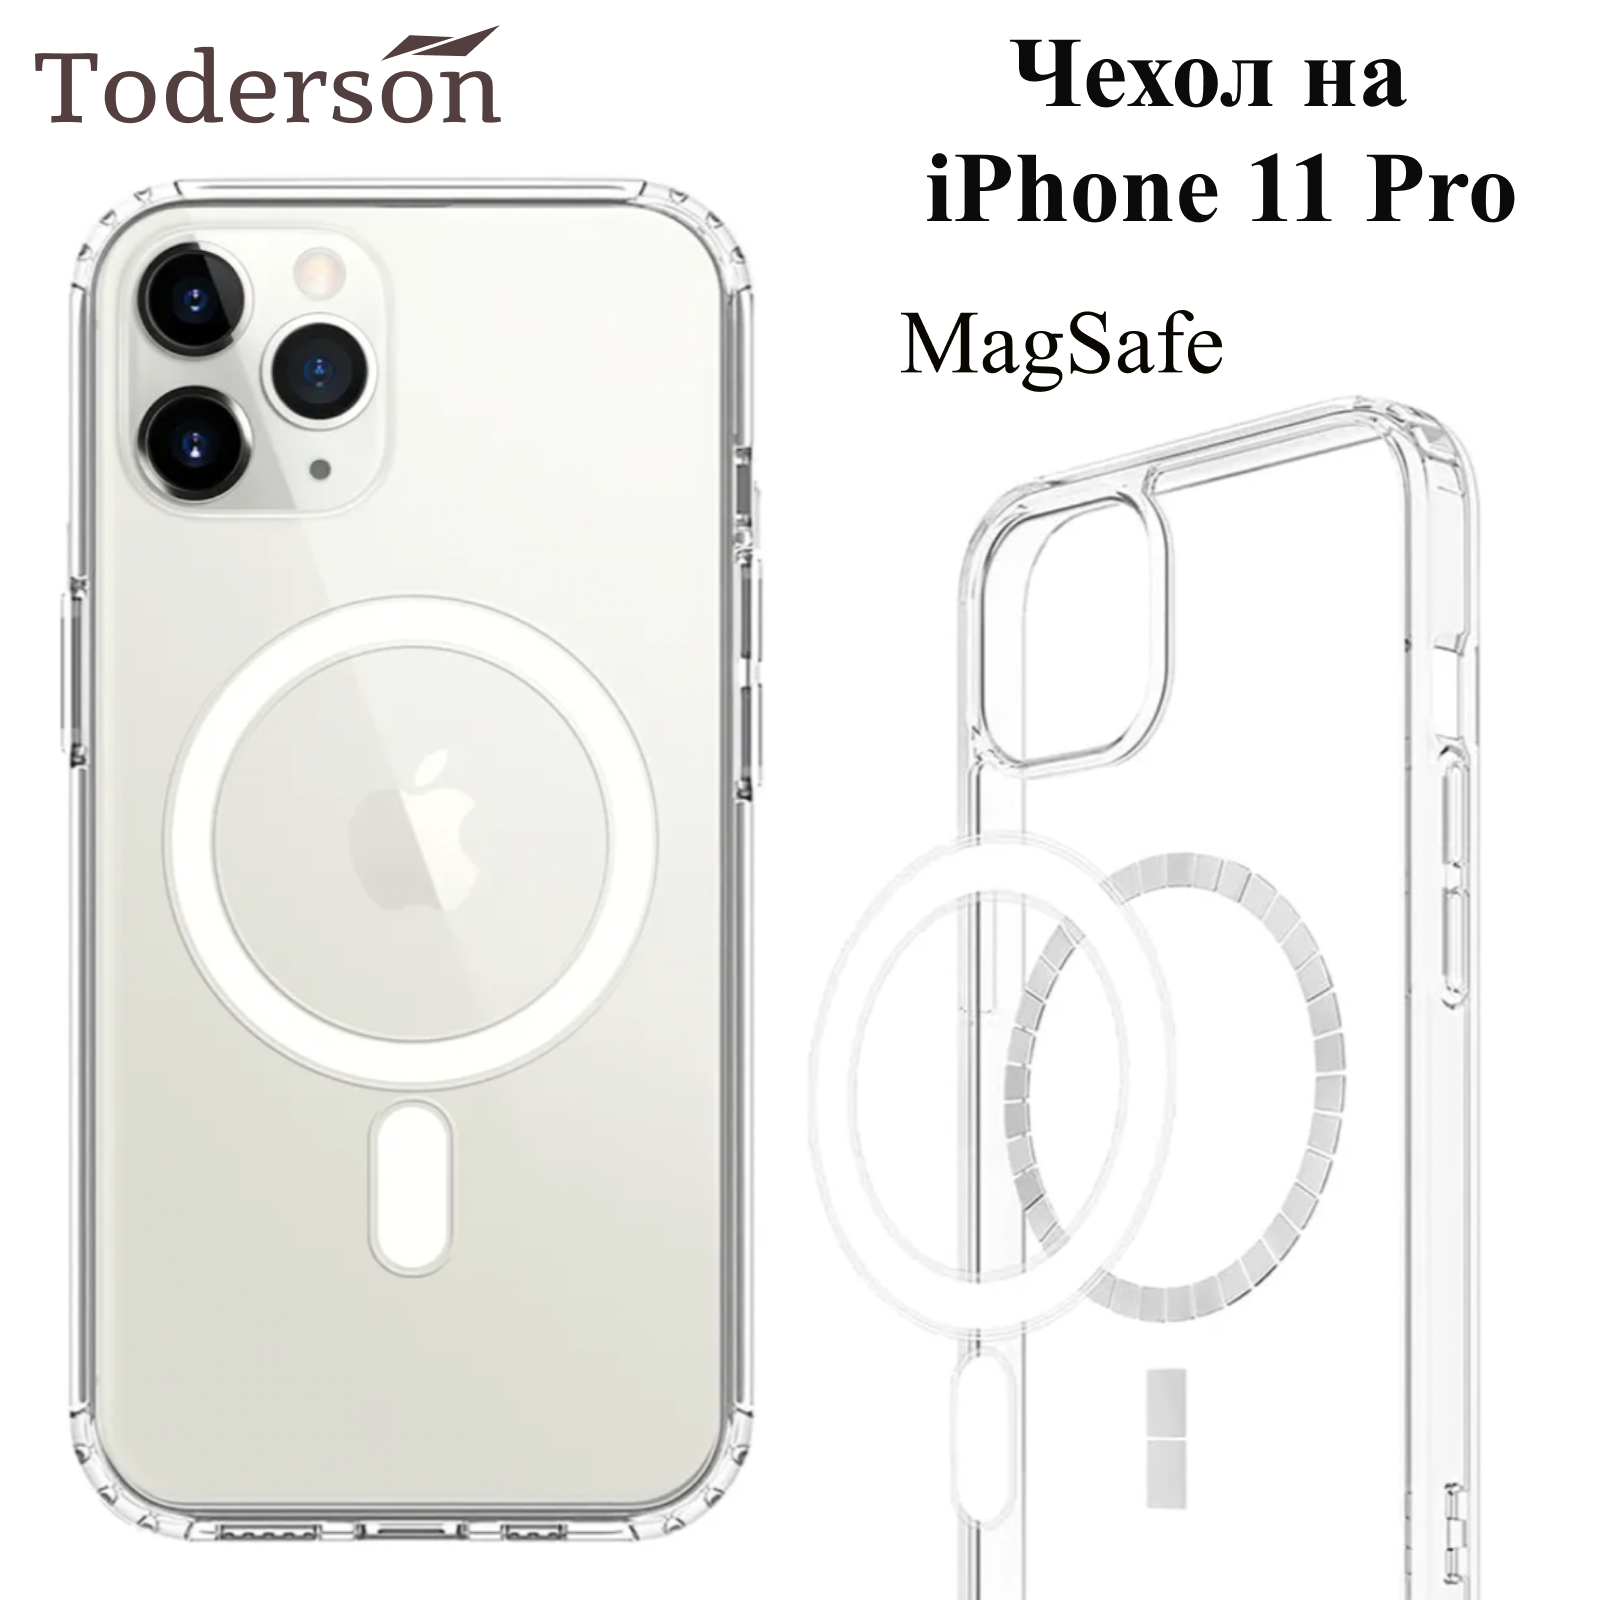 Чехол на iPhone 11 Pro MagSafe Toderson